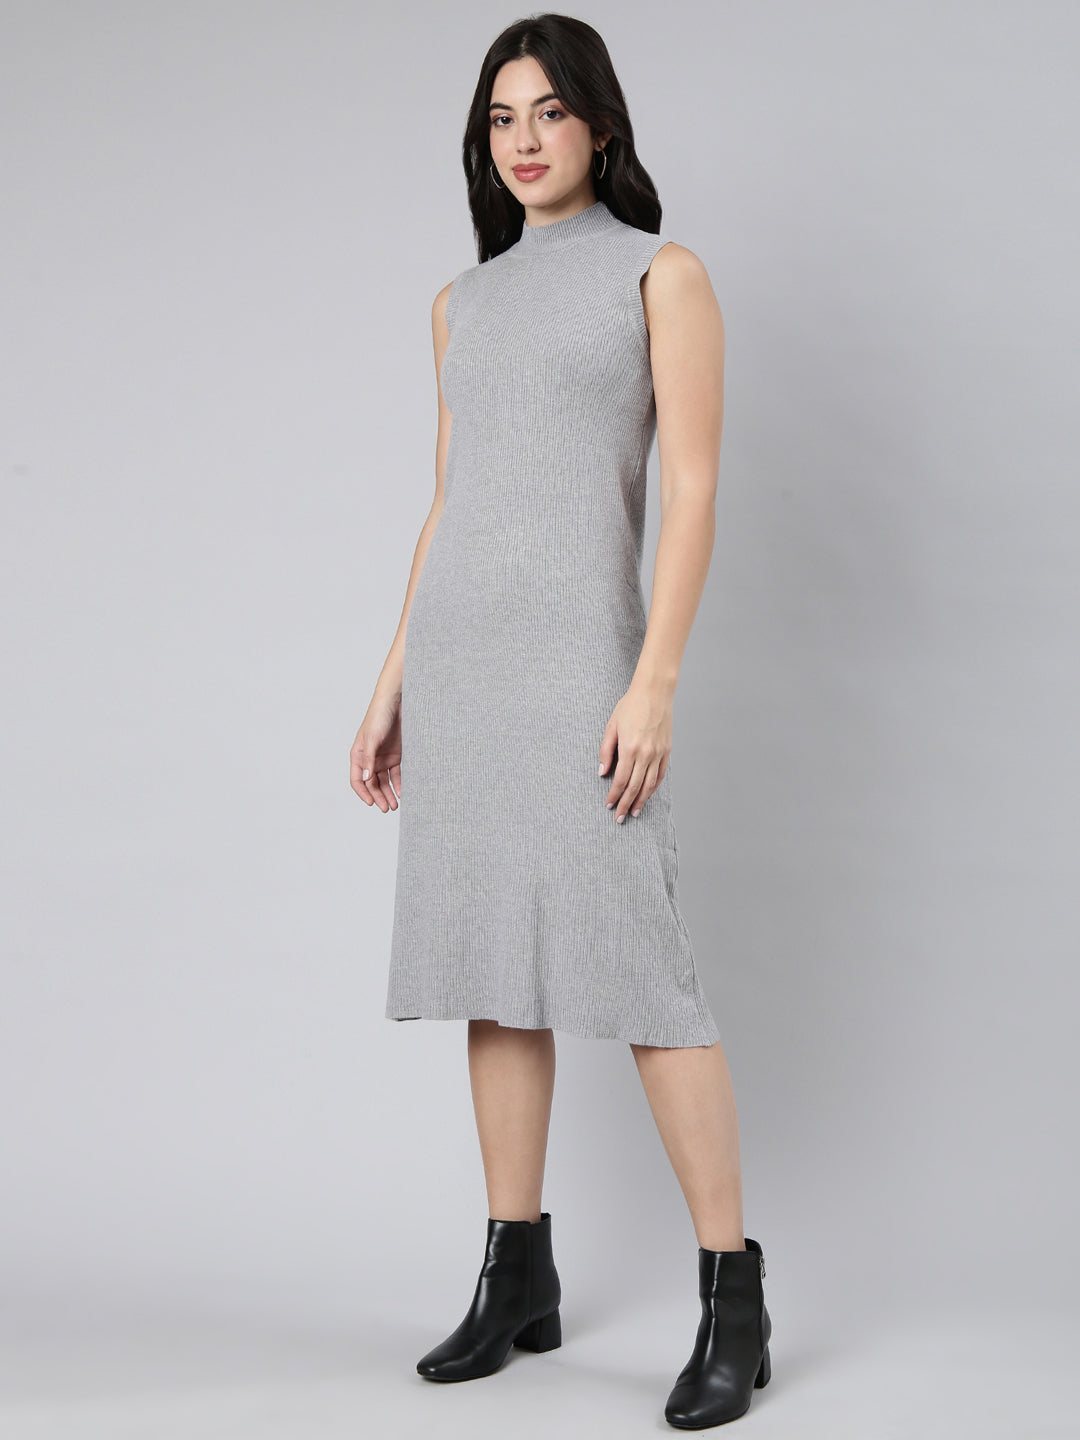 Women Solid Grey A-Line Dress